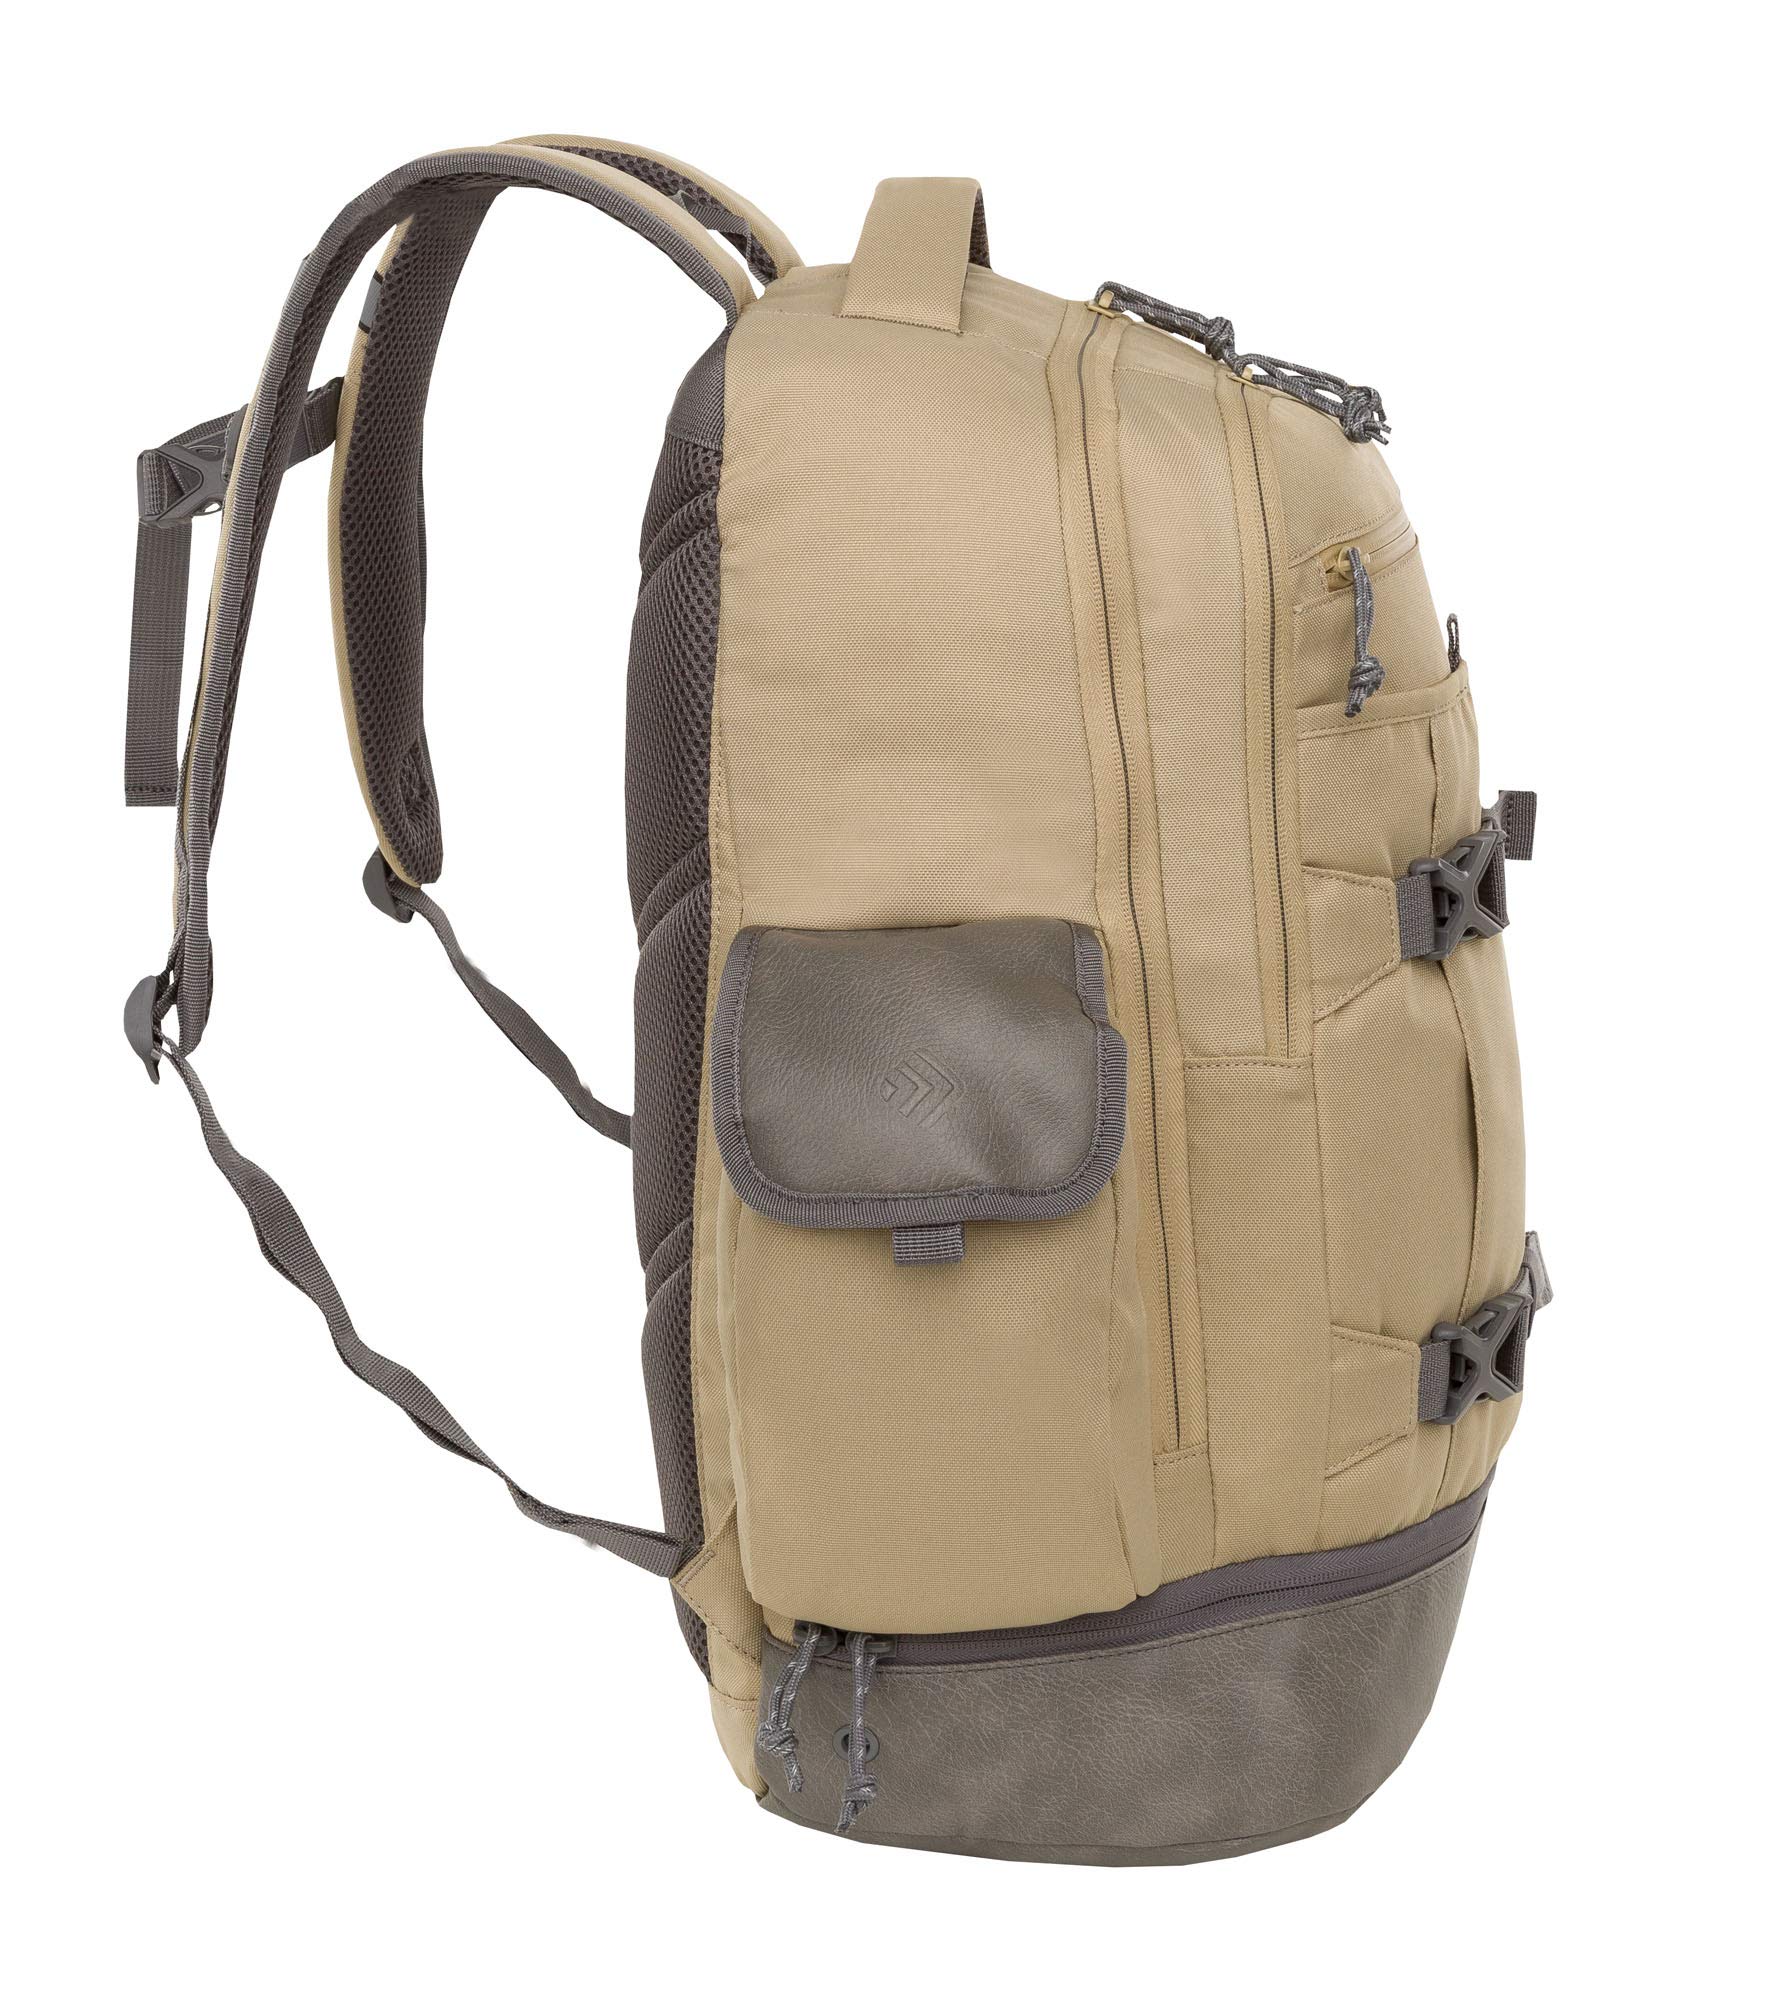 Combat Bag Weighted Bag | Lifeline Fitness